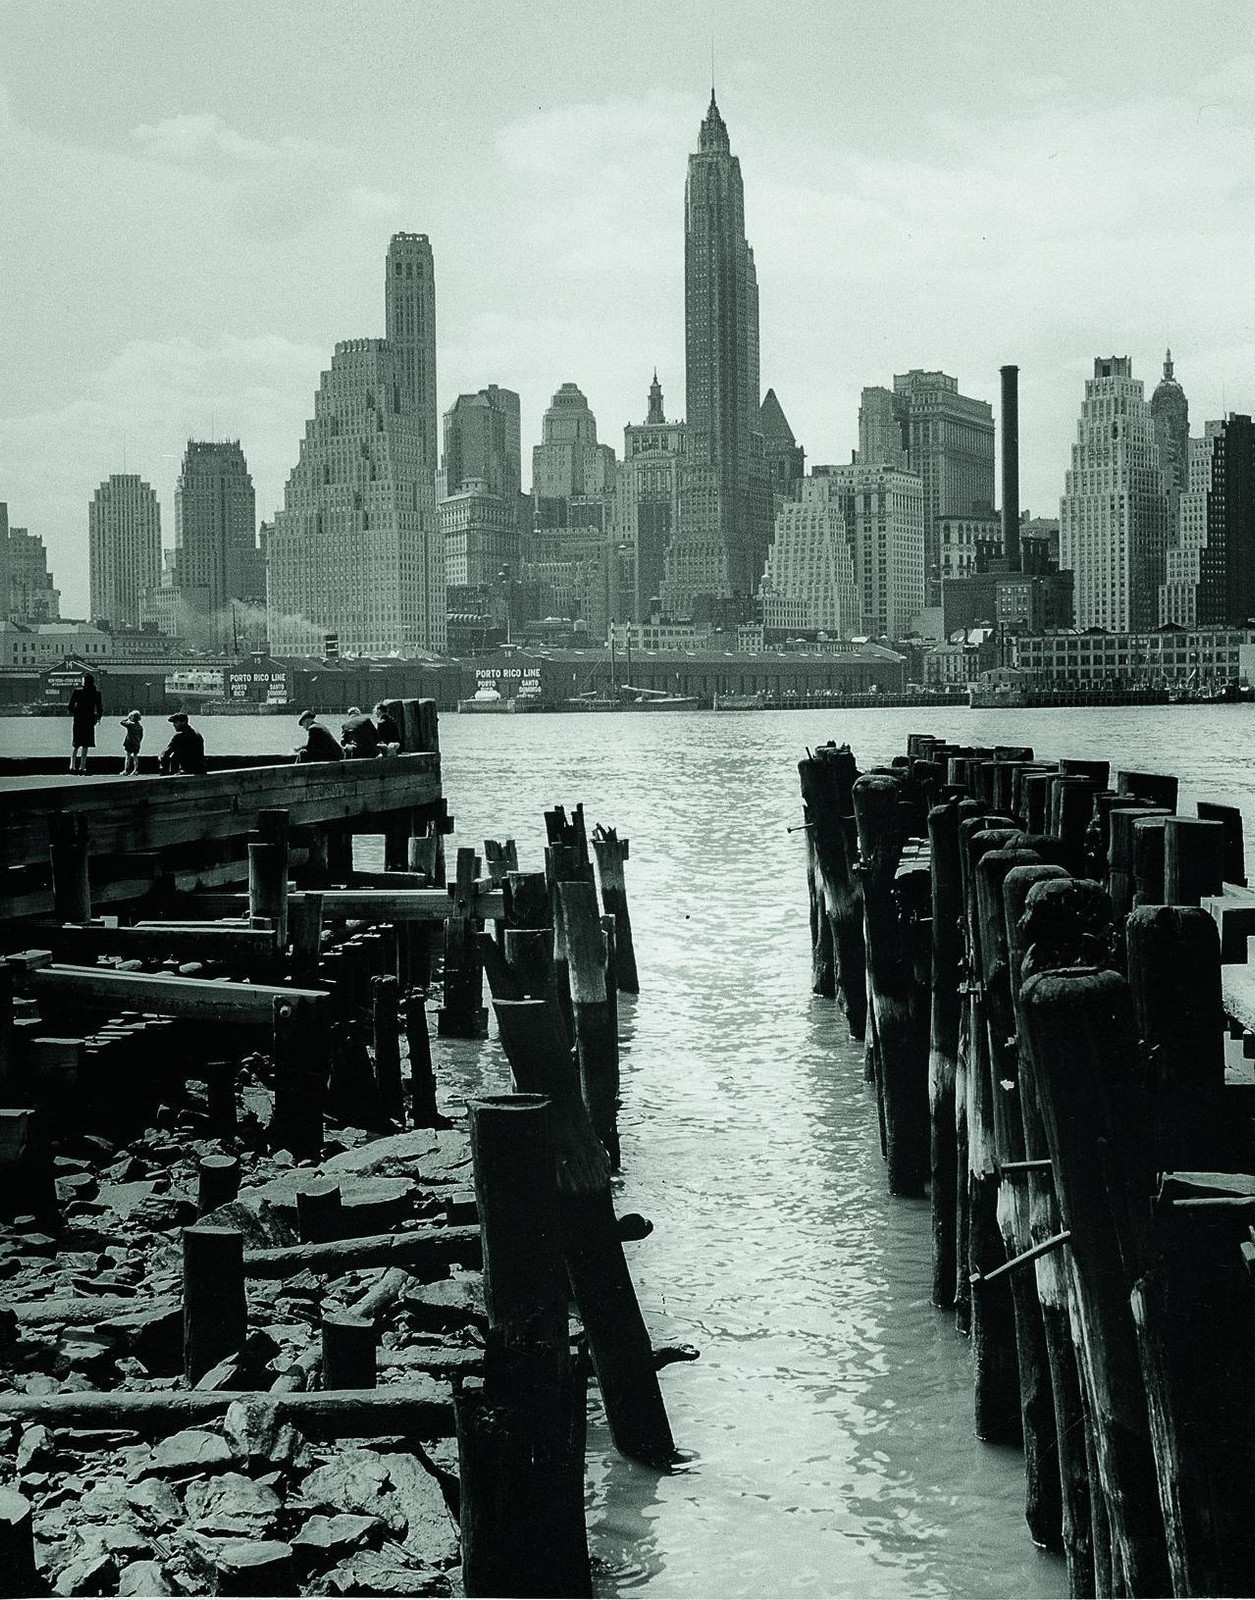 Andreas Feininger, Lower Manhattan seen from Brooklyn, ca 1930-40.